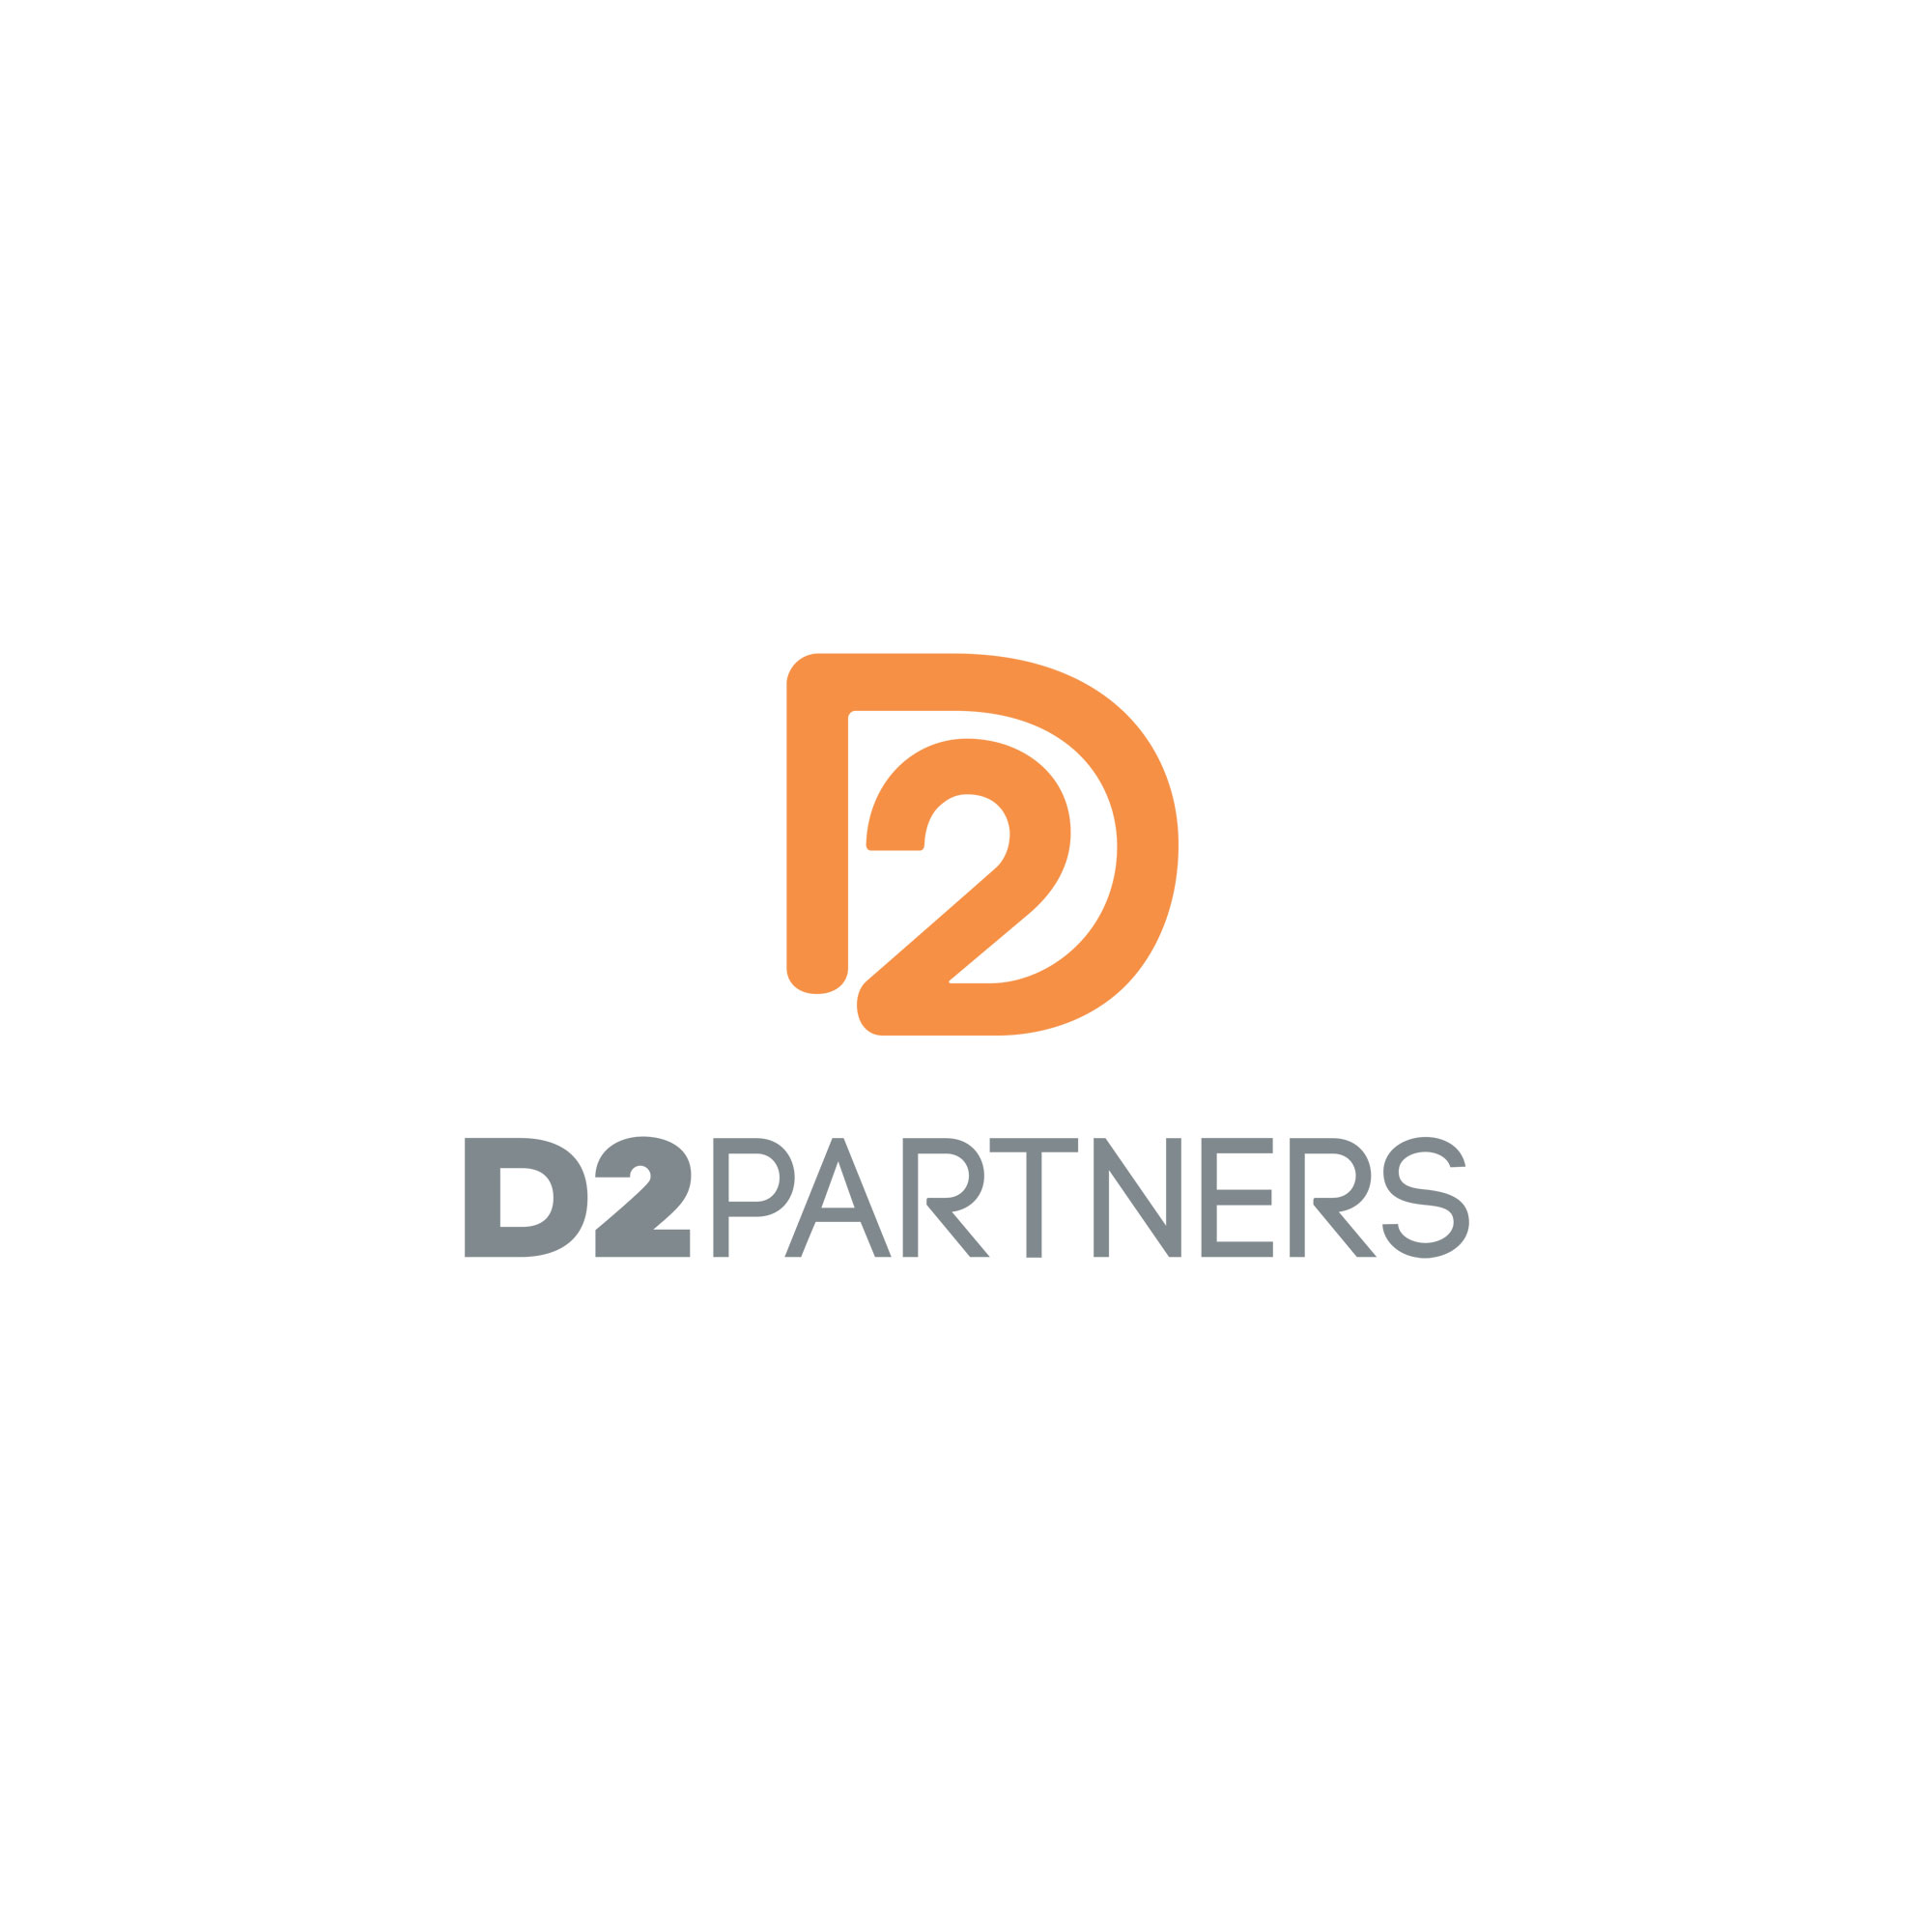 D2 Partners Logo Design